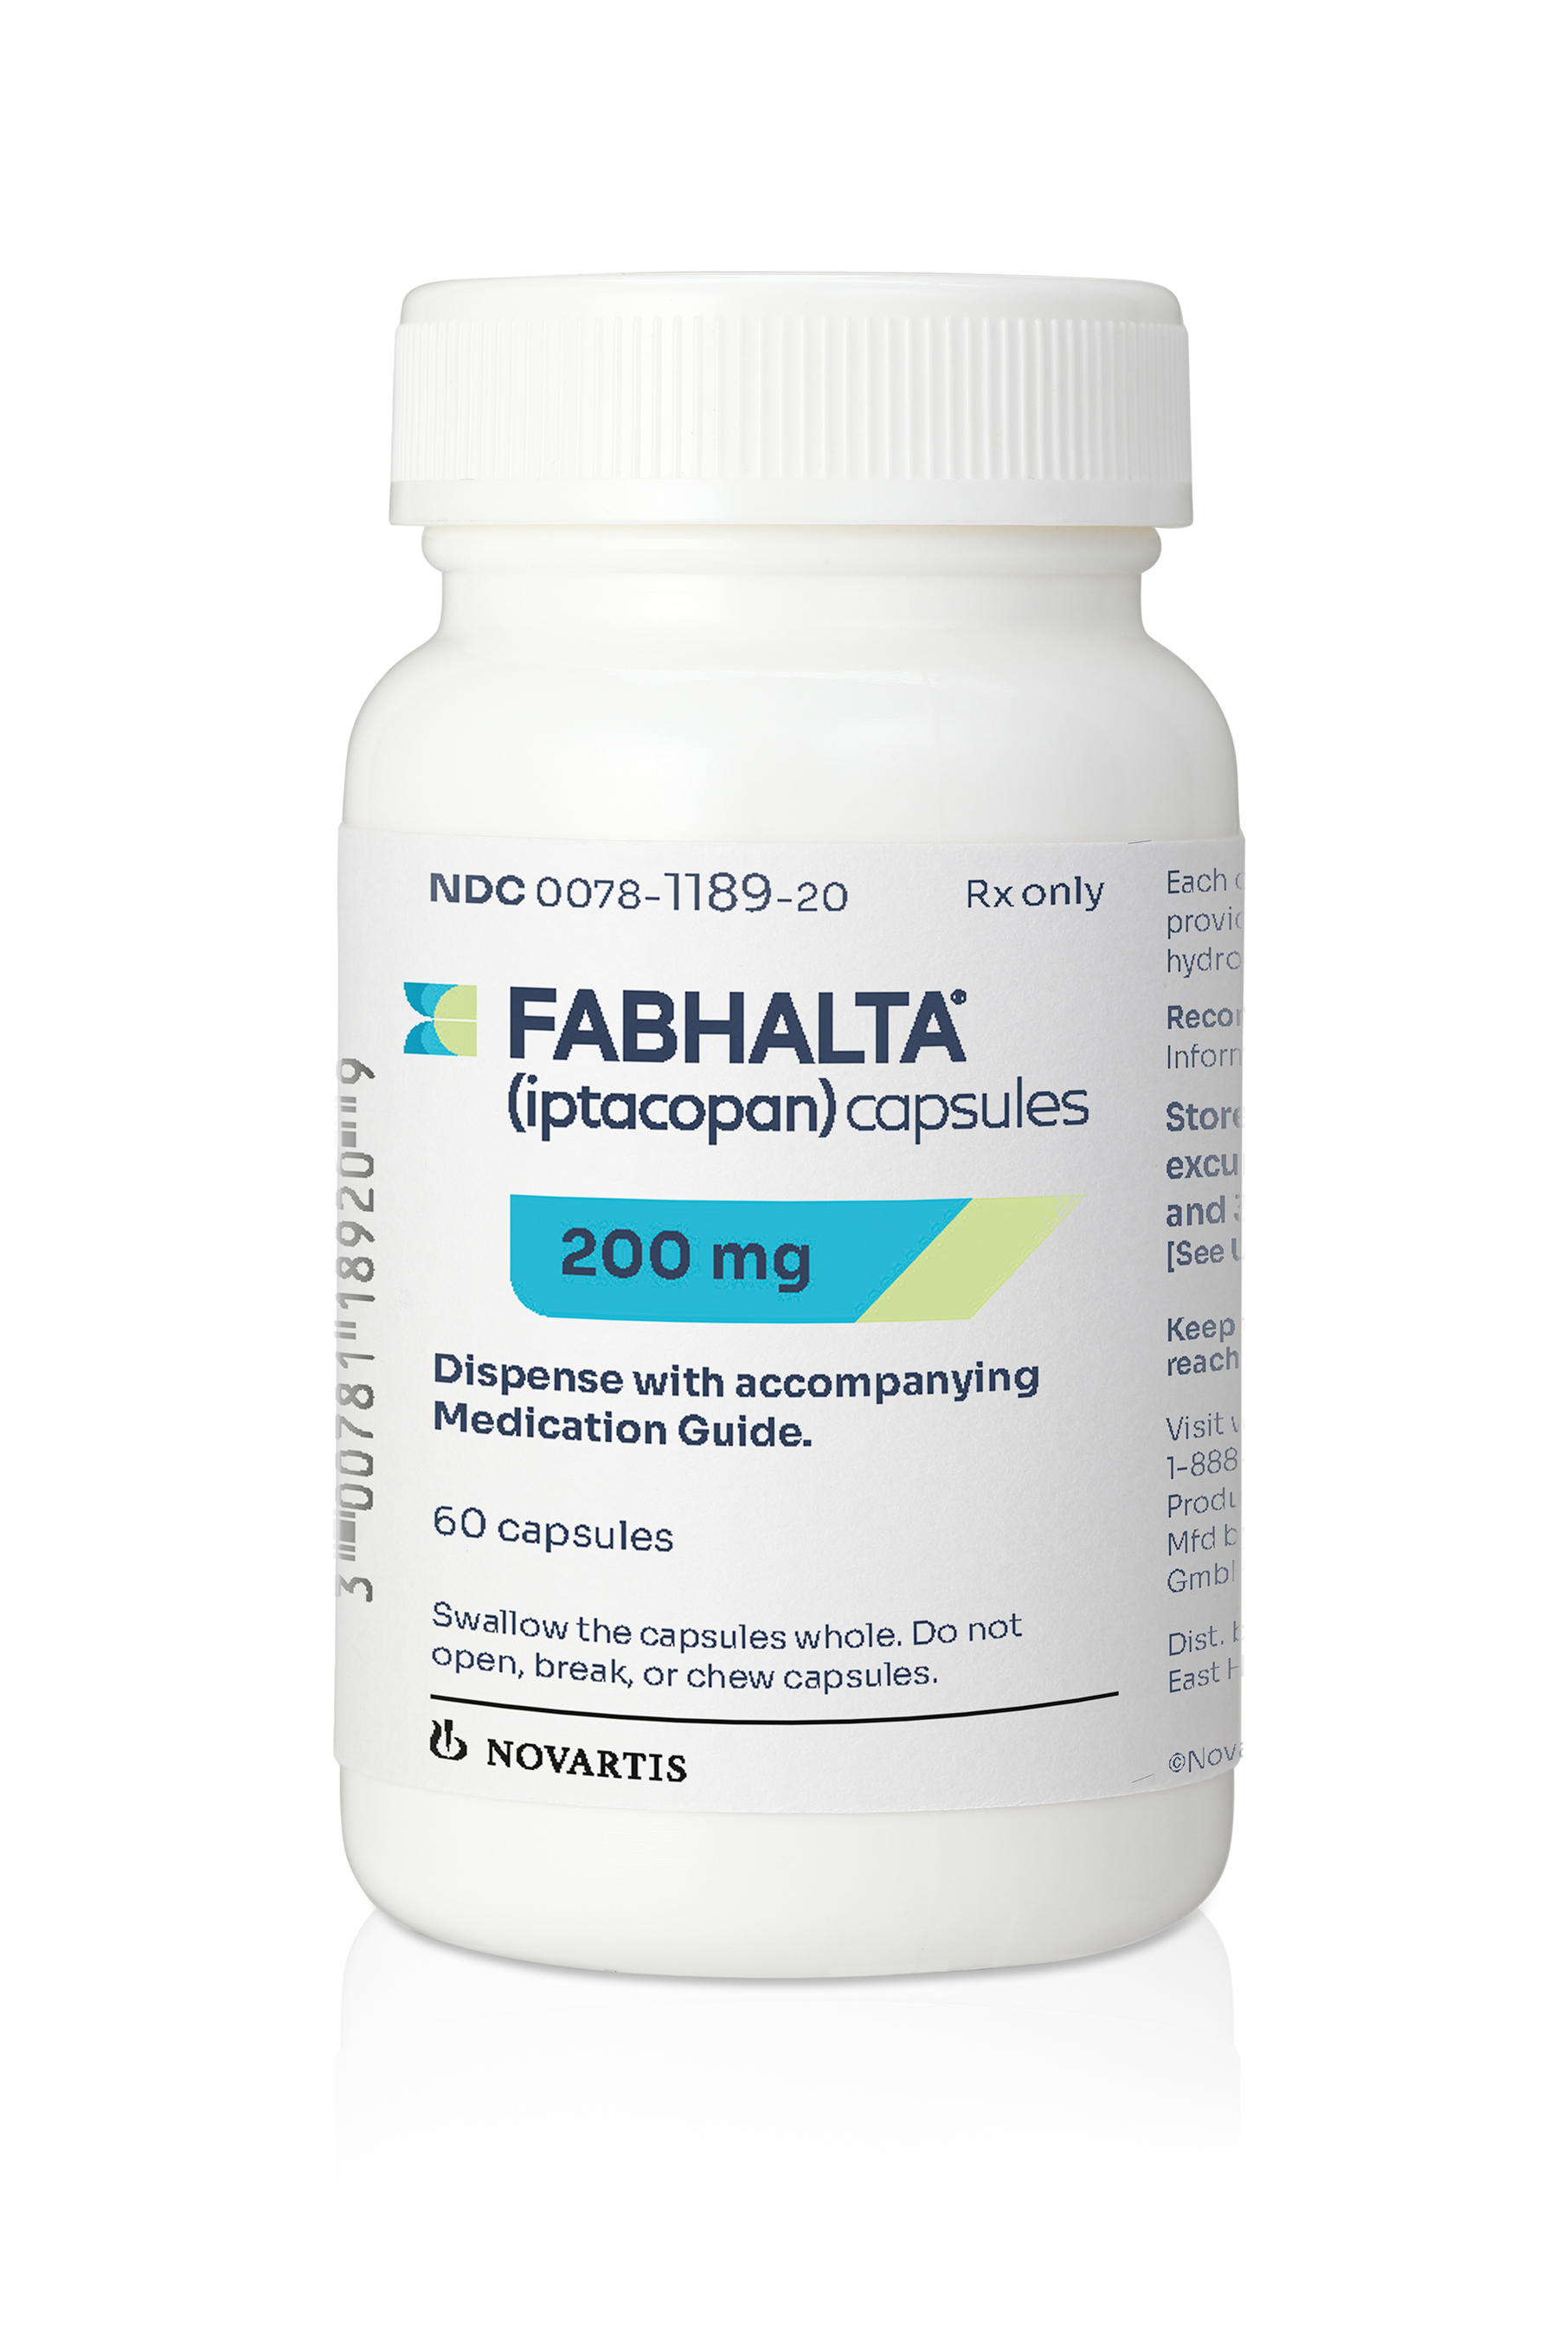 Fabhalta® (iptacopan) packaging